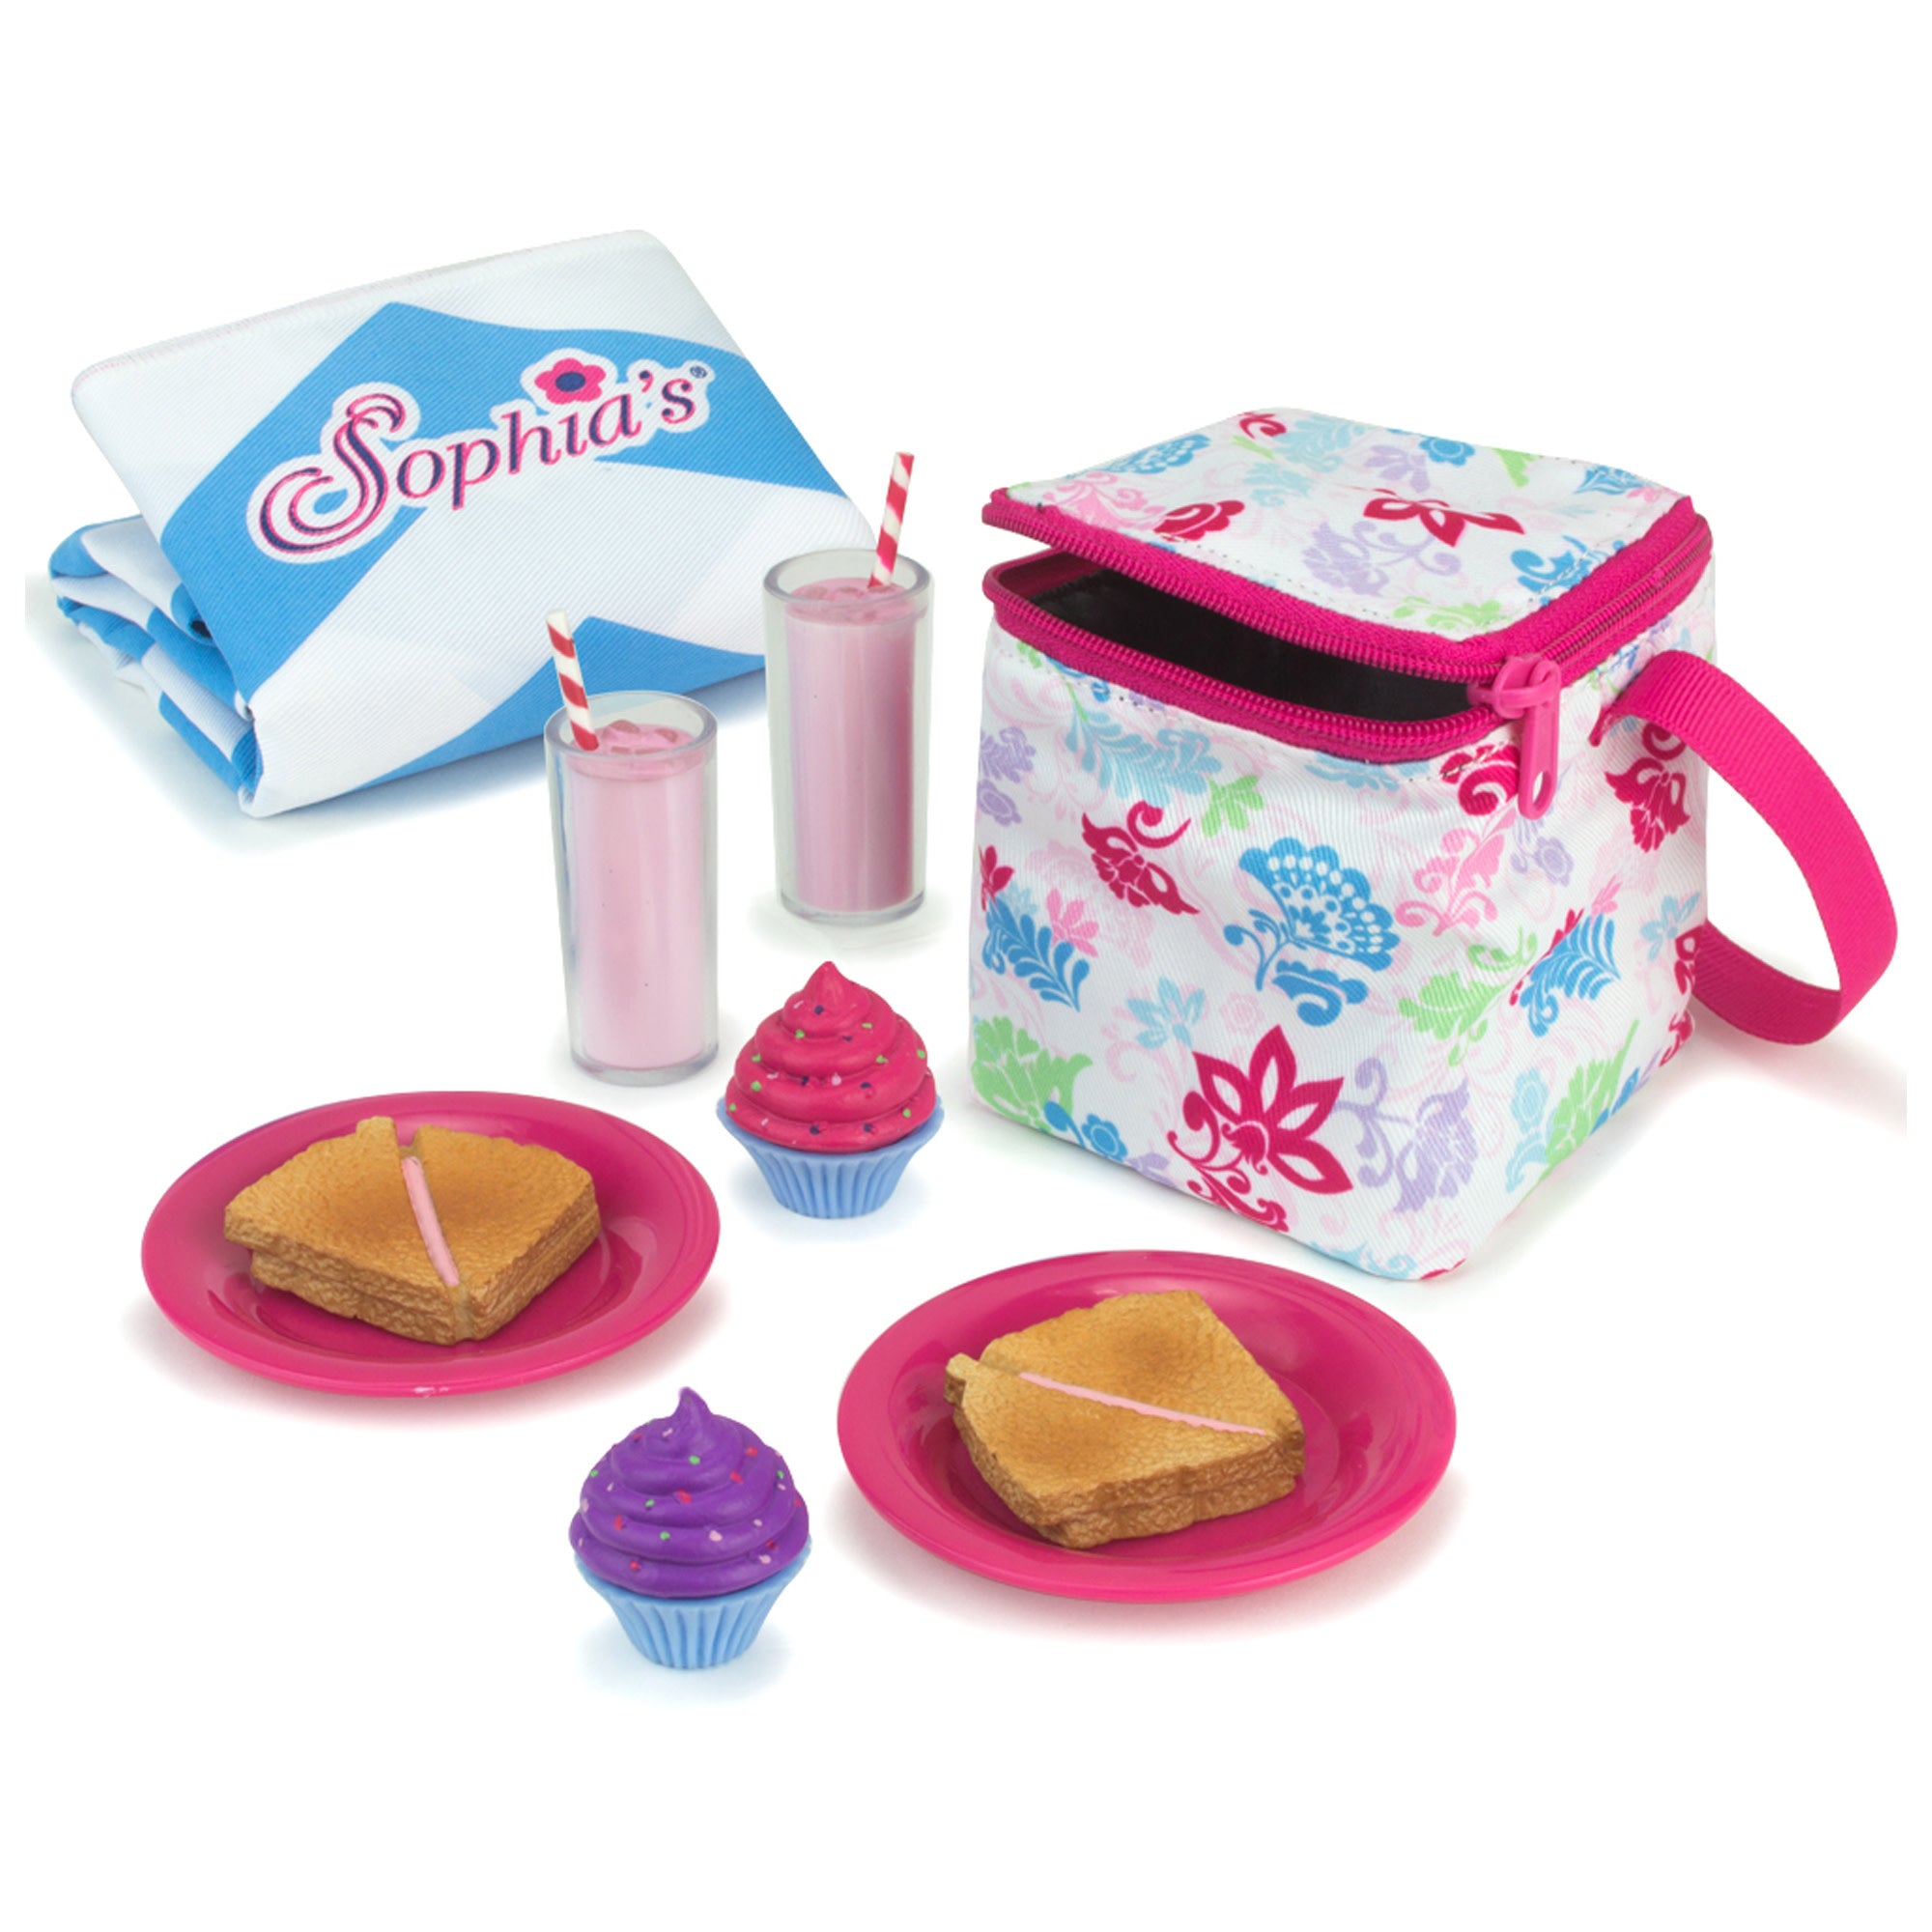 Sophias Picnic Lunch Set with Food and Cooler for 18" Dolls